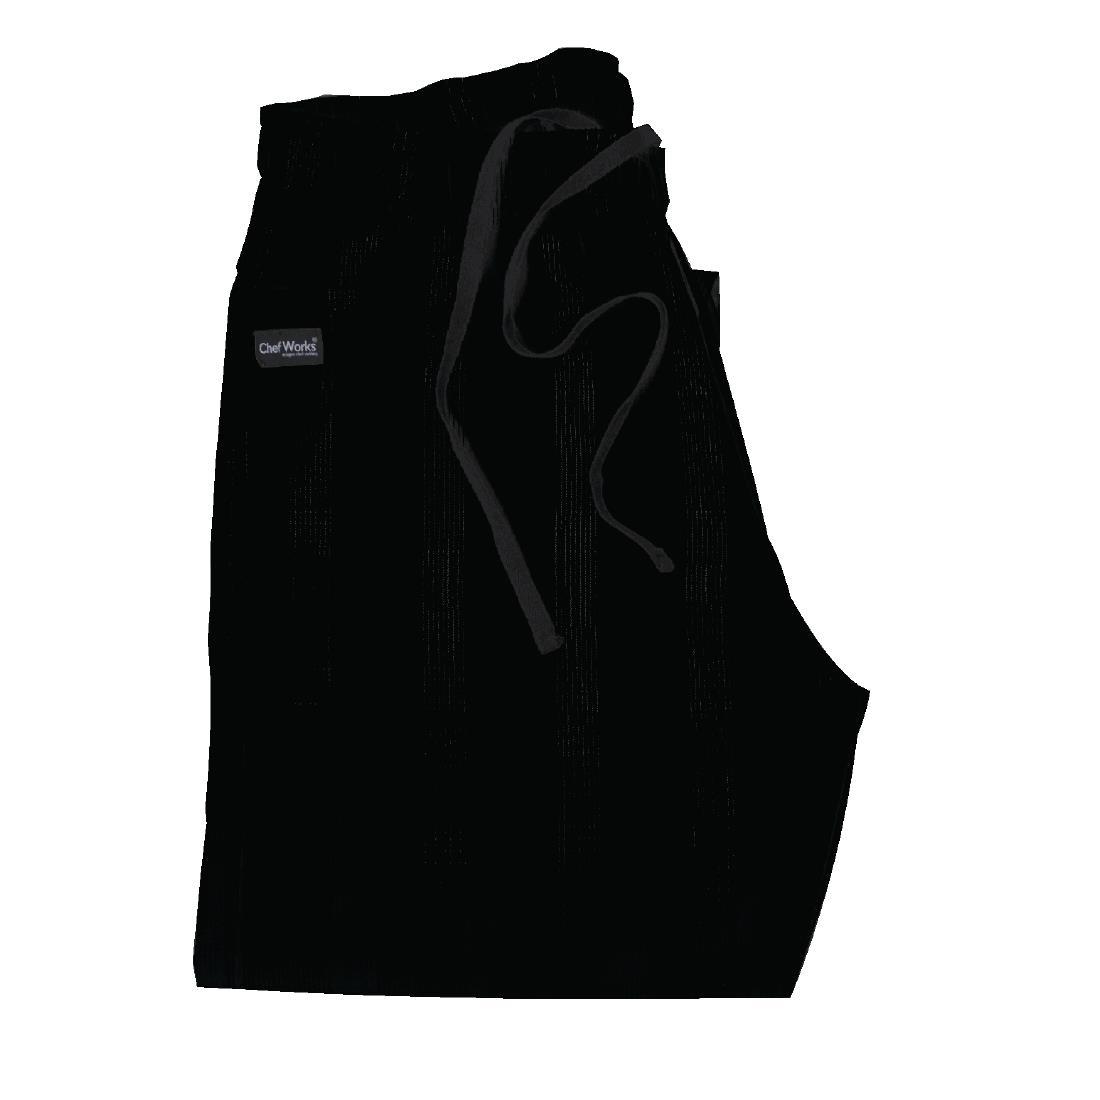 Chef Works Unisex Better Built Baggy Chefs Trousers Black M - A695-M  - 3